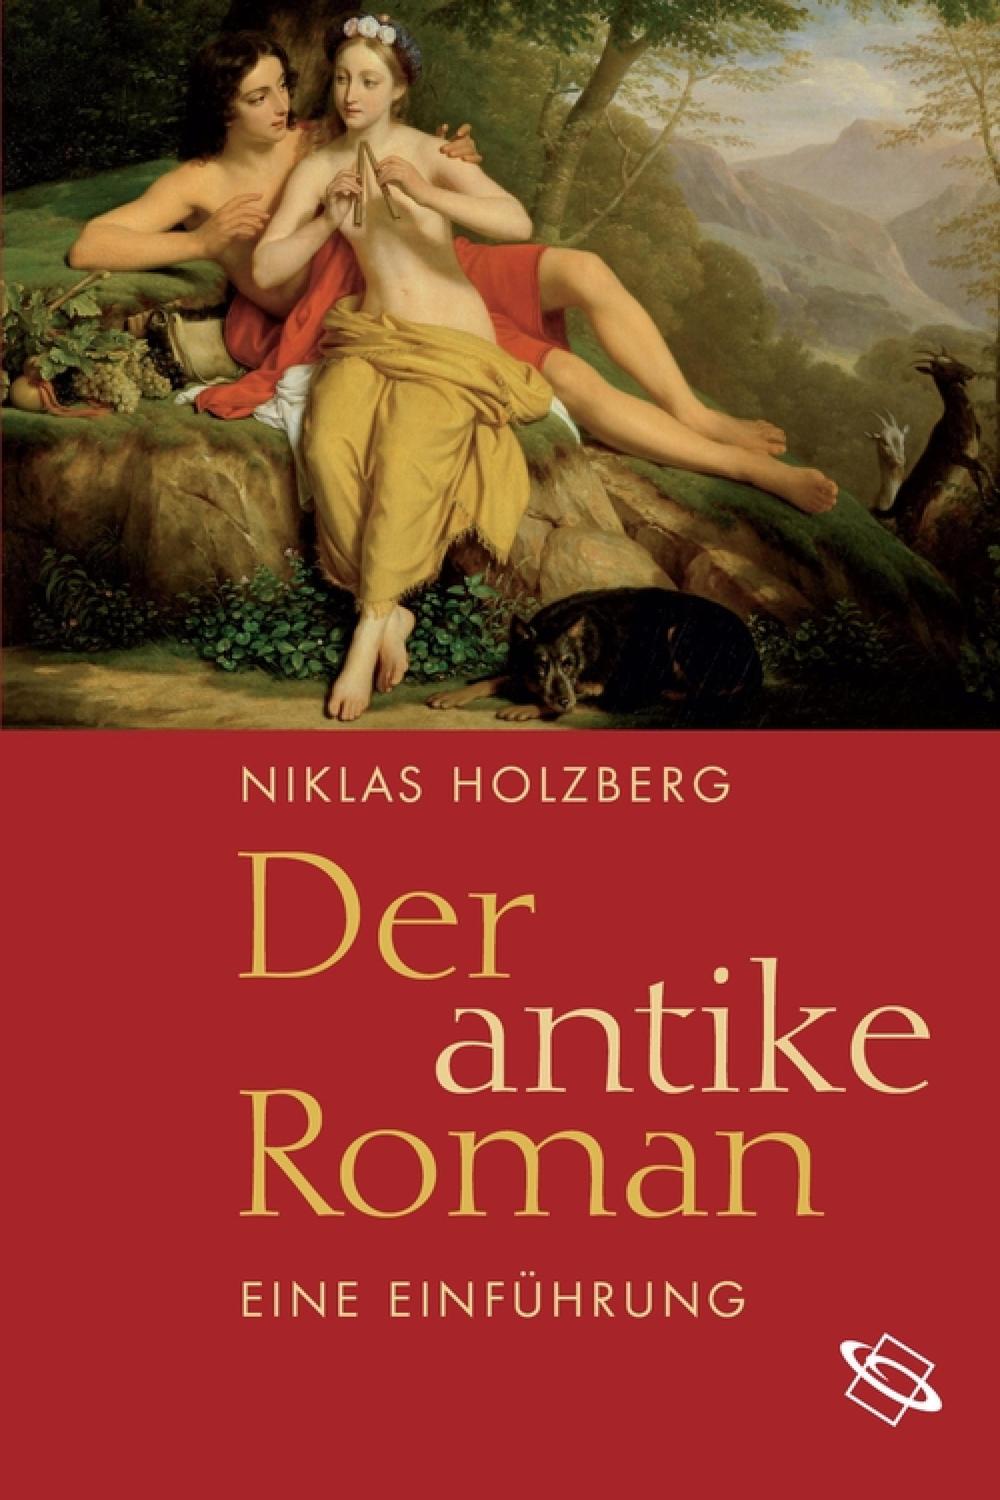 Der antike Roman - Niklas Holzberg